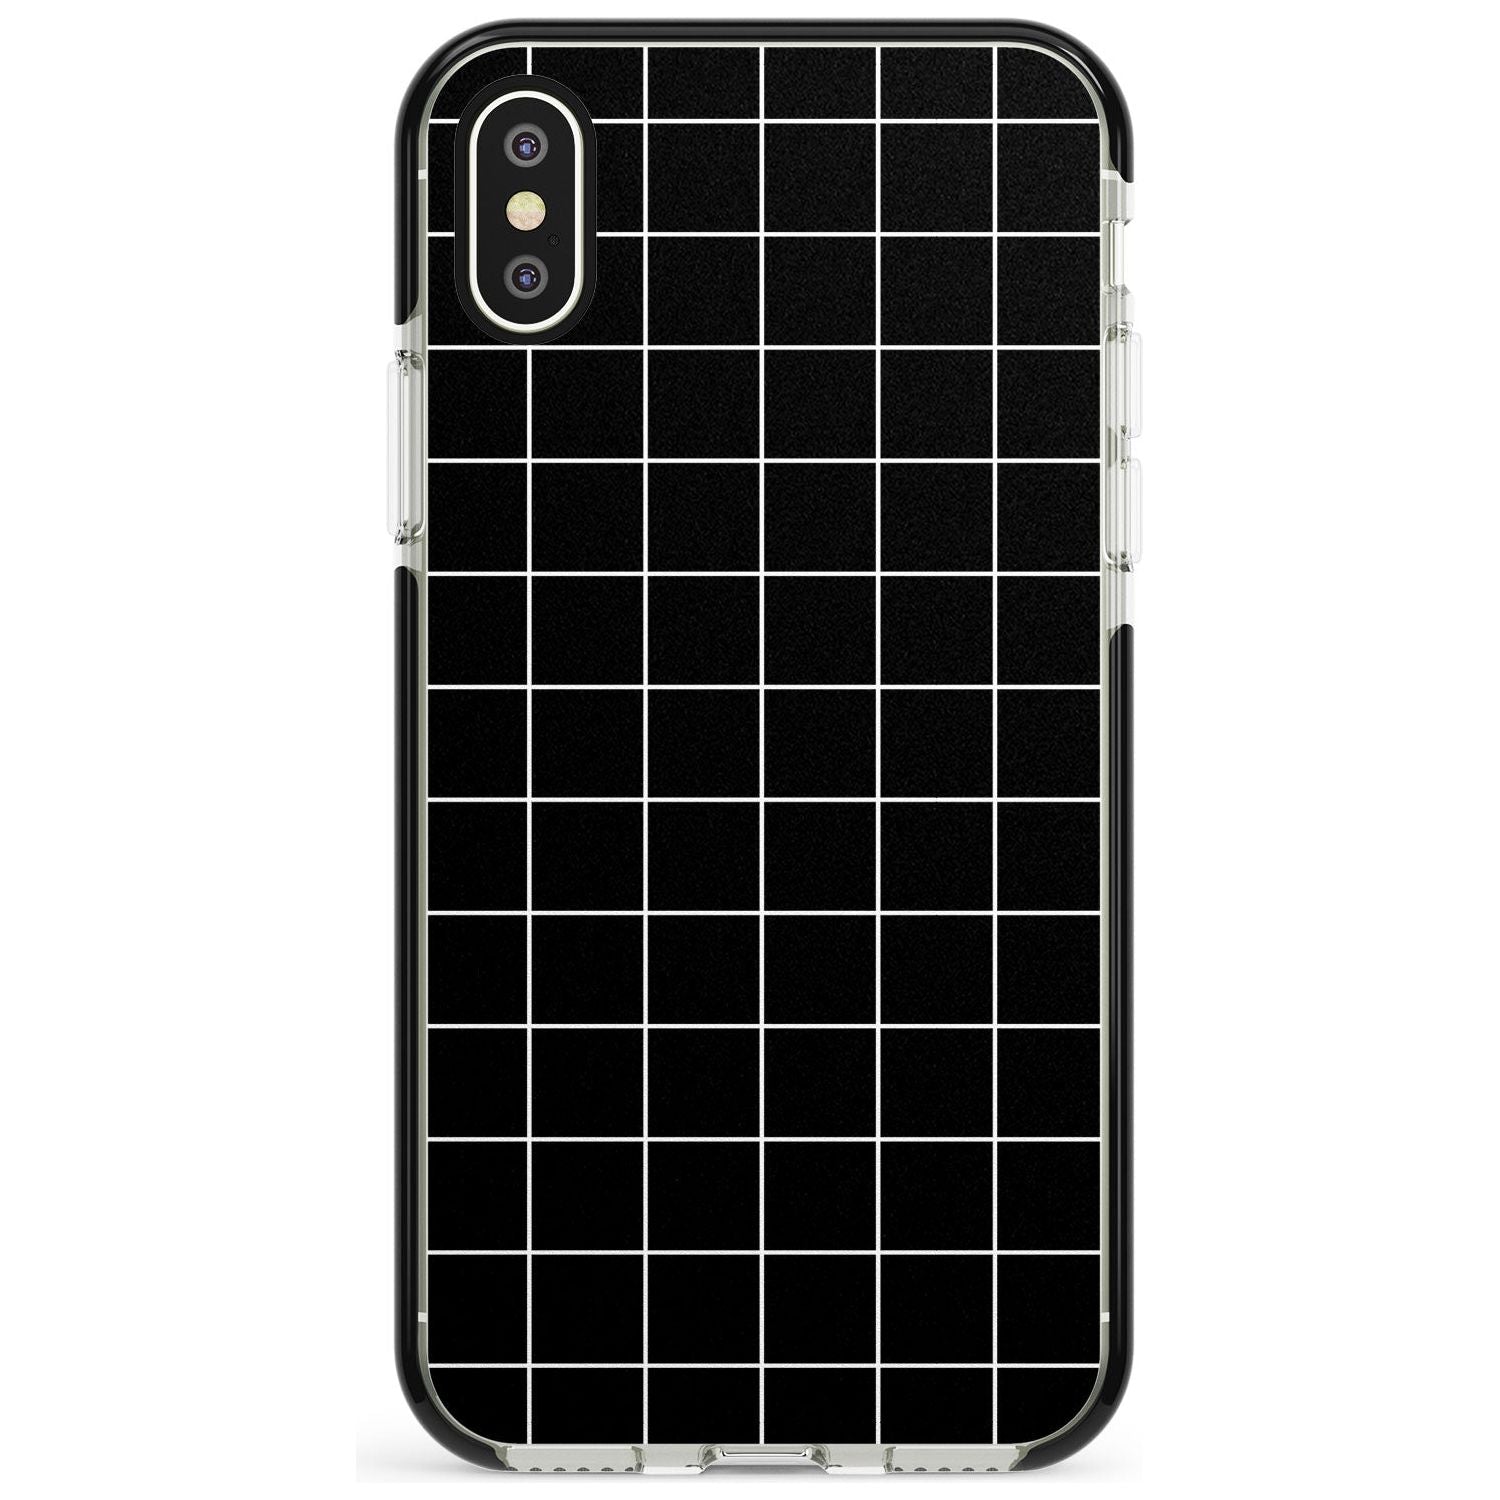 Simplistic Large Grid Pattern Black Black Impact Phone Case for iPhone X XS Max XR